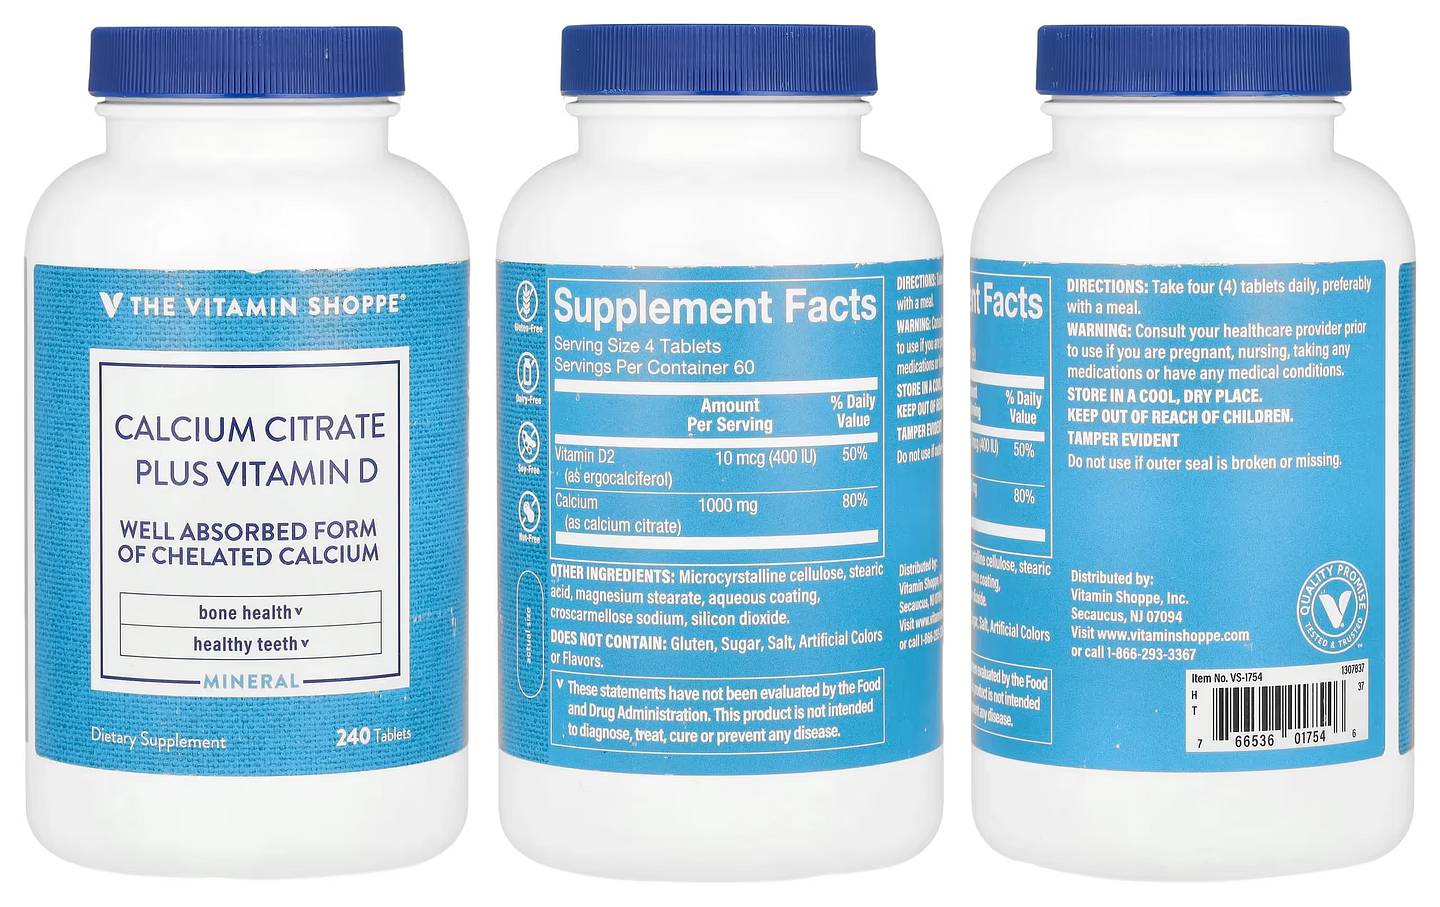 The Vitamin Shoppe, Calcium Citrate Plus Vitamin D packaging